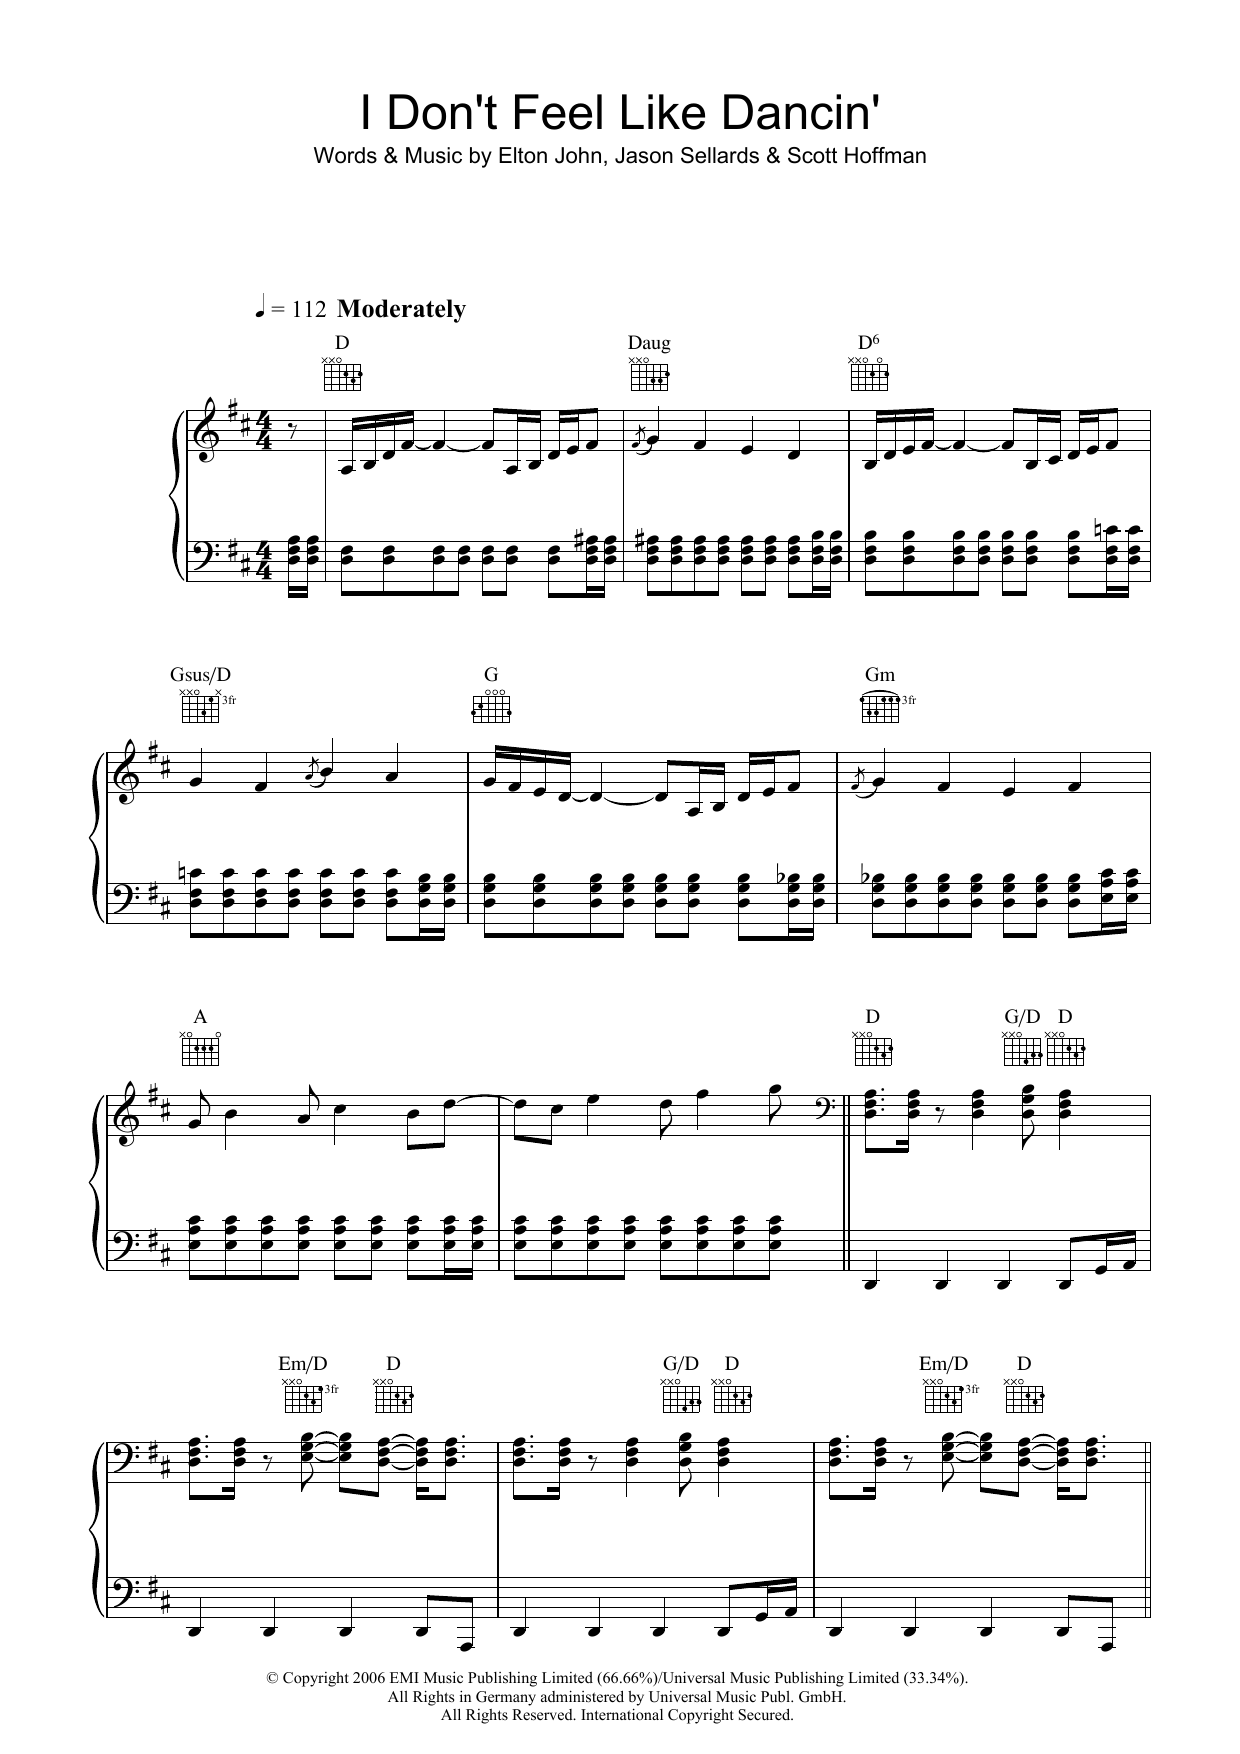 Download Scissor Sisters I Don't Feel Like Dancin' Sheet Music and learn how to play Keyboard PDF digital score in minutes